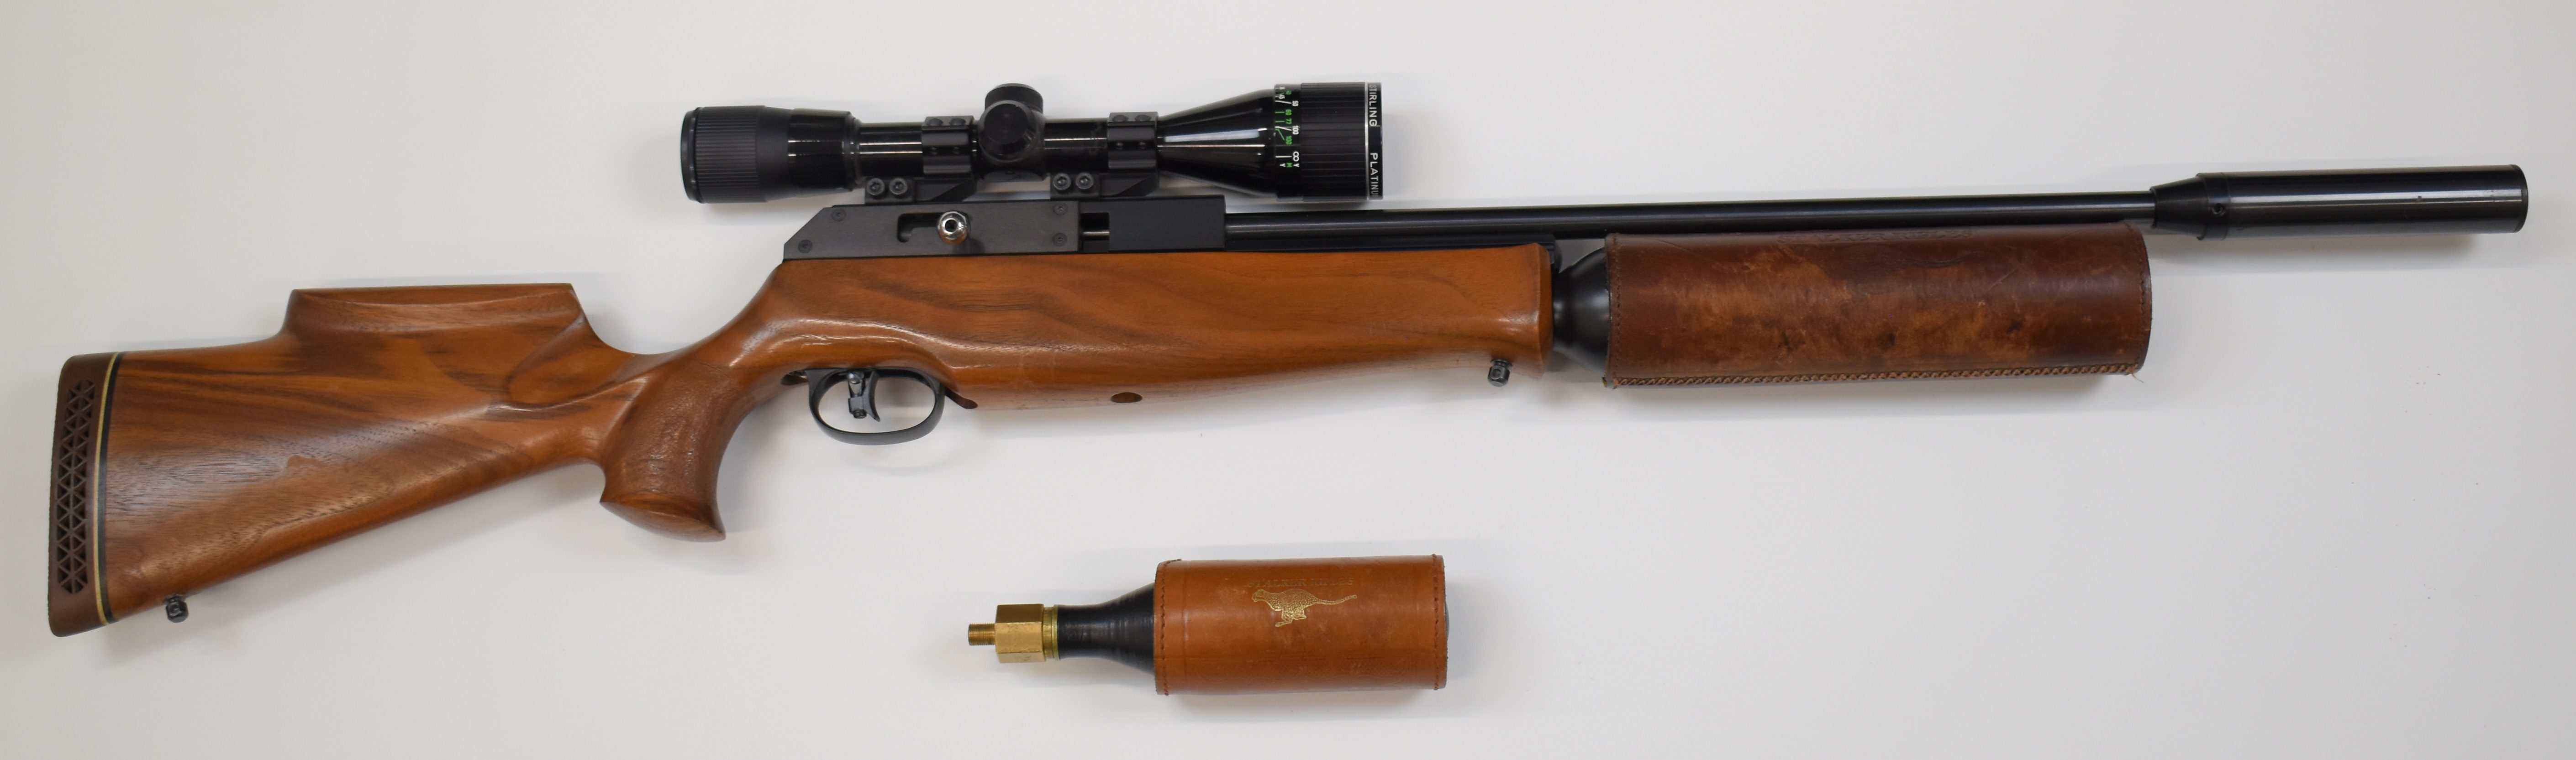 Stalker Rifles Tiger Ten BSA Super Ten style .22 FAC PCP air rifle with textured semi-pistol grip, - Image 2 of 9